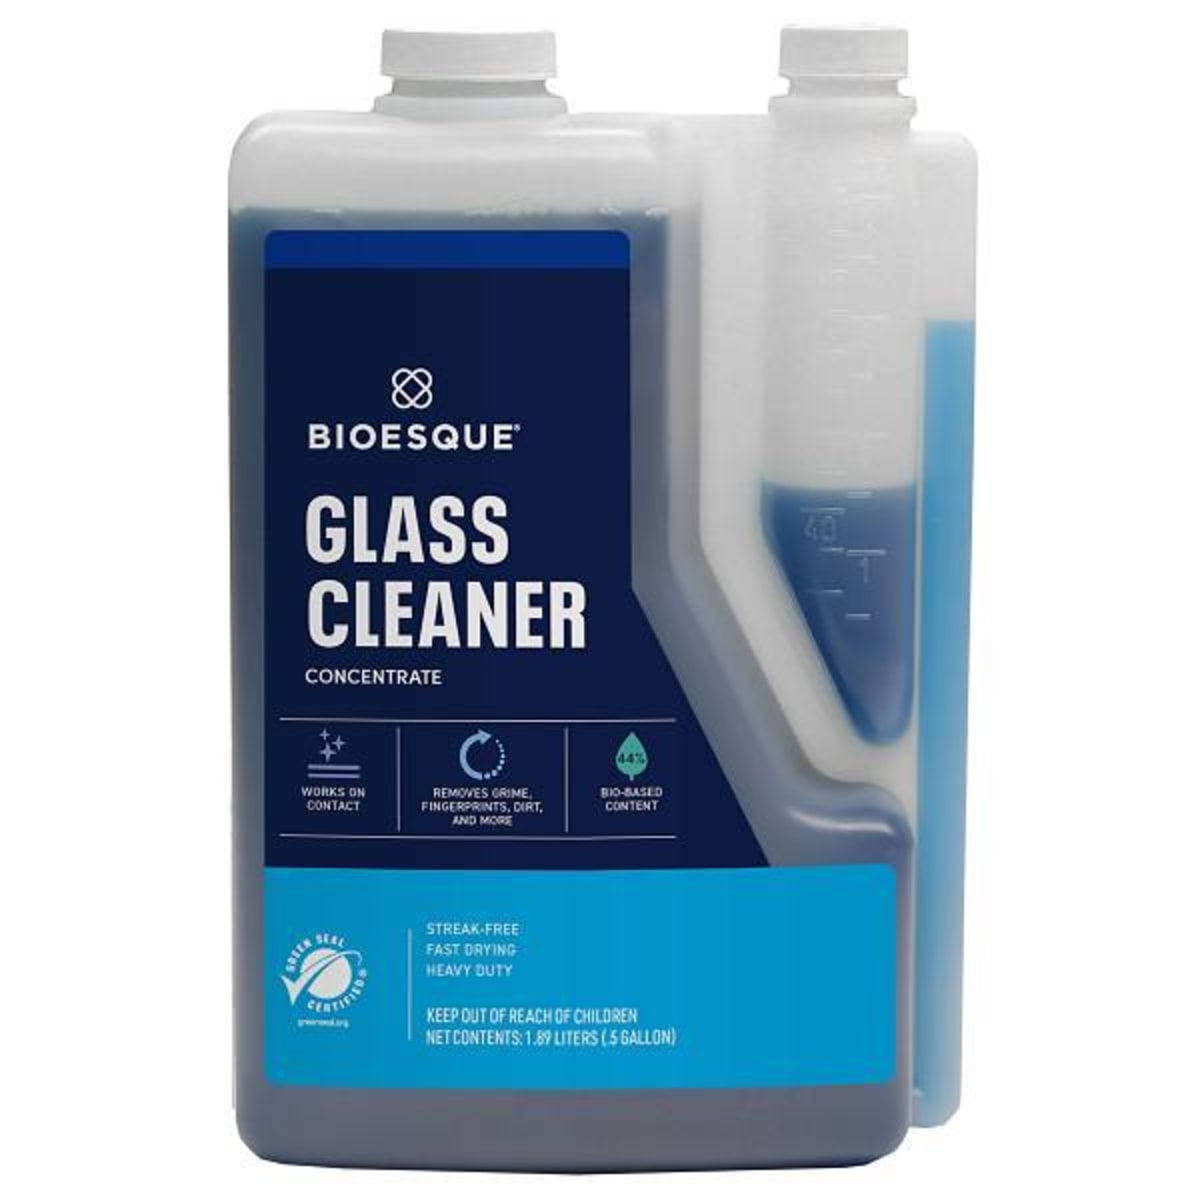 ClearView - Streak Free Glass Cleaner (16oz Bottle)